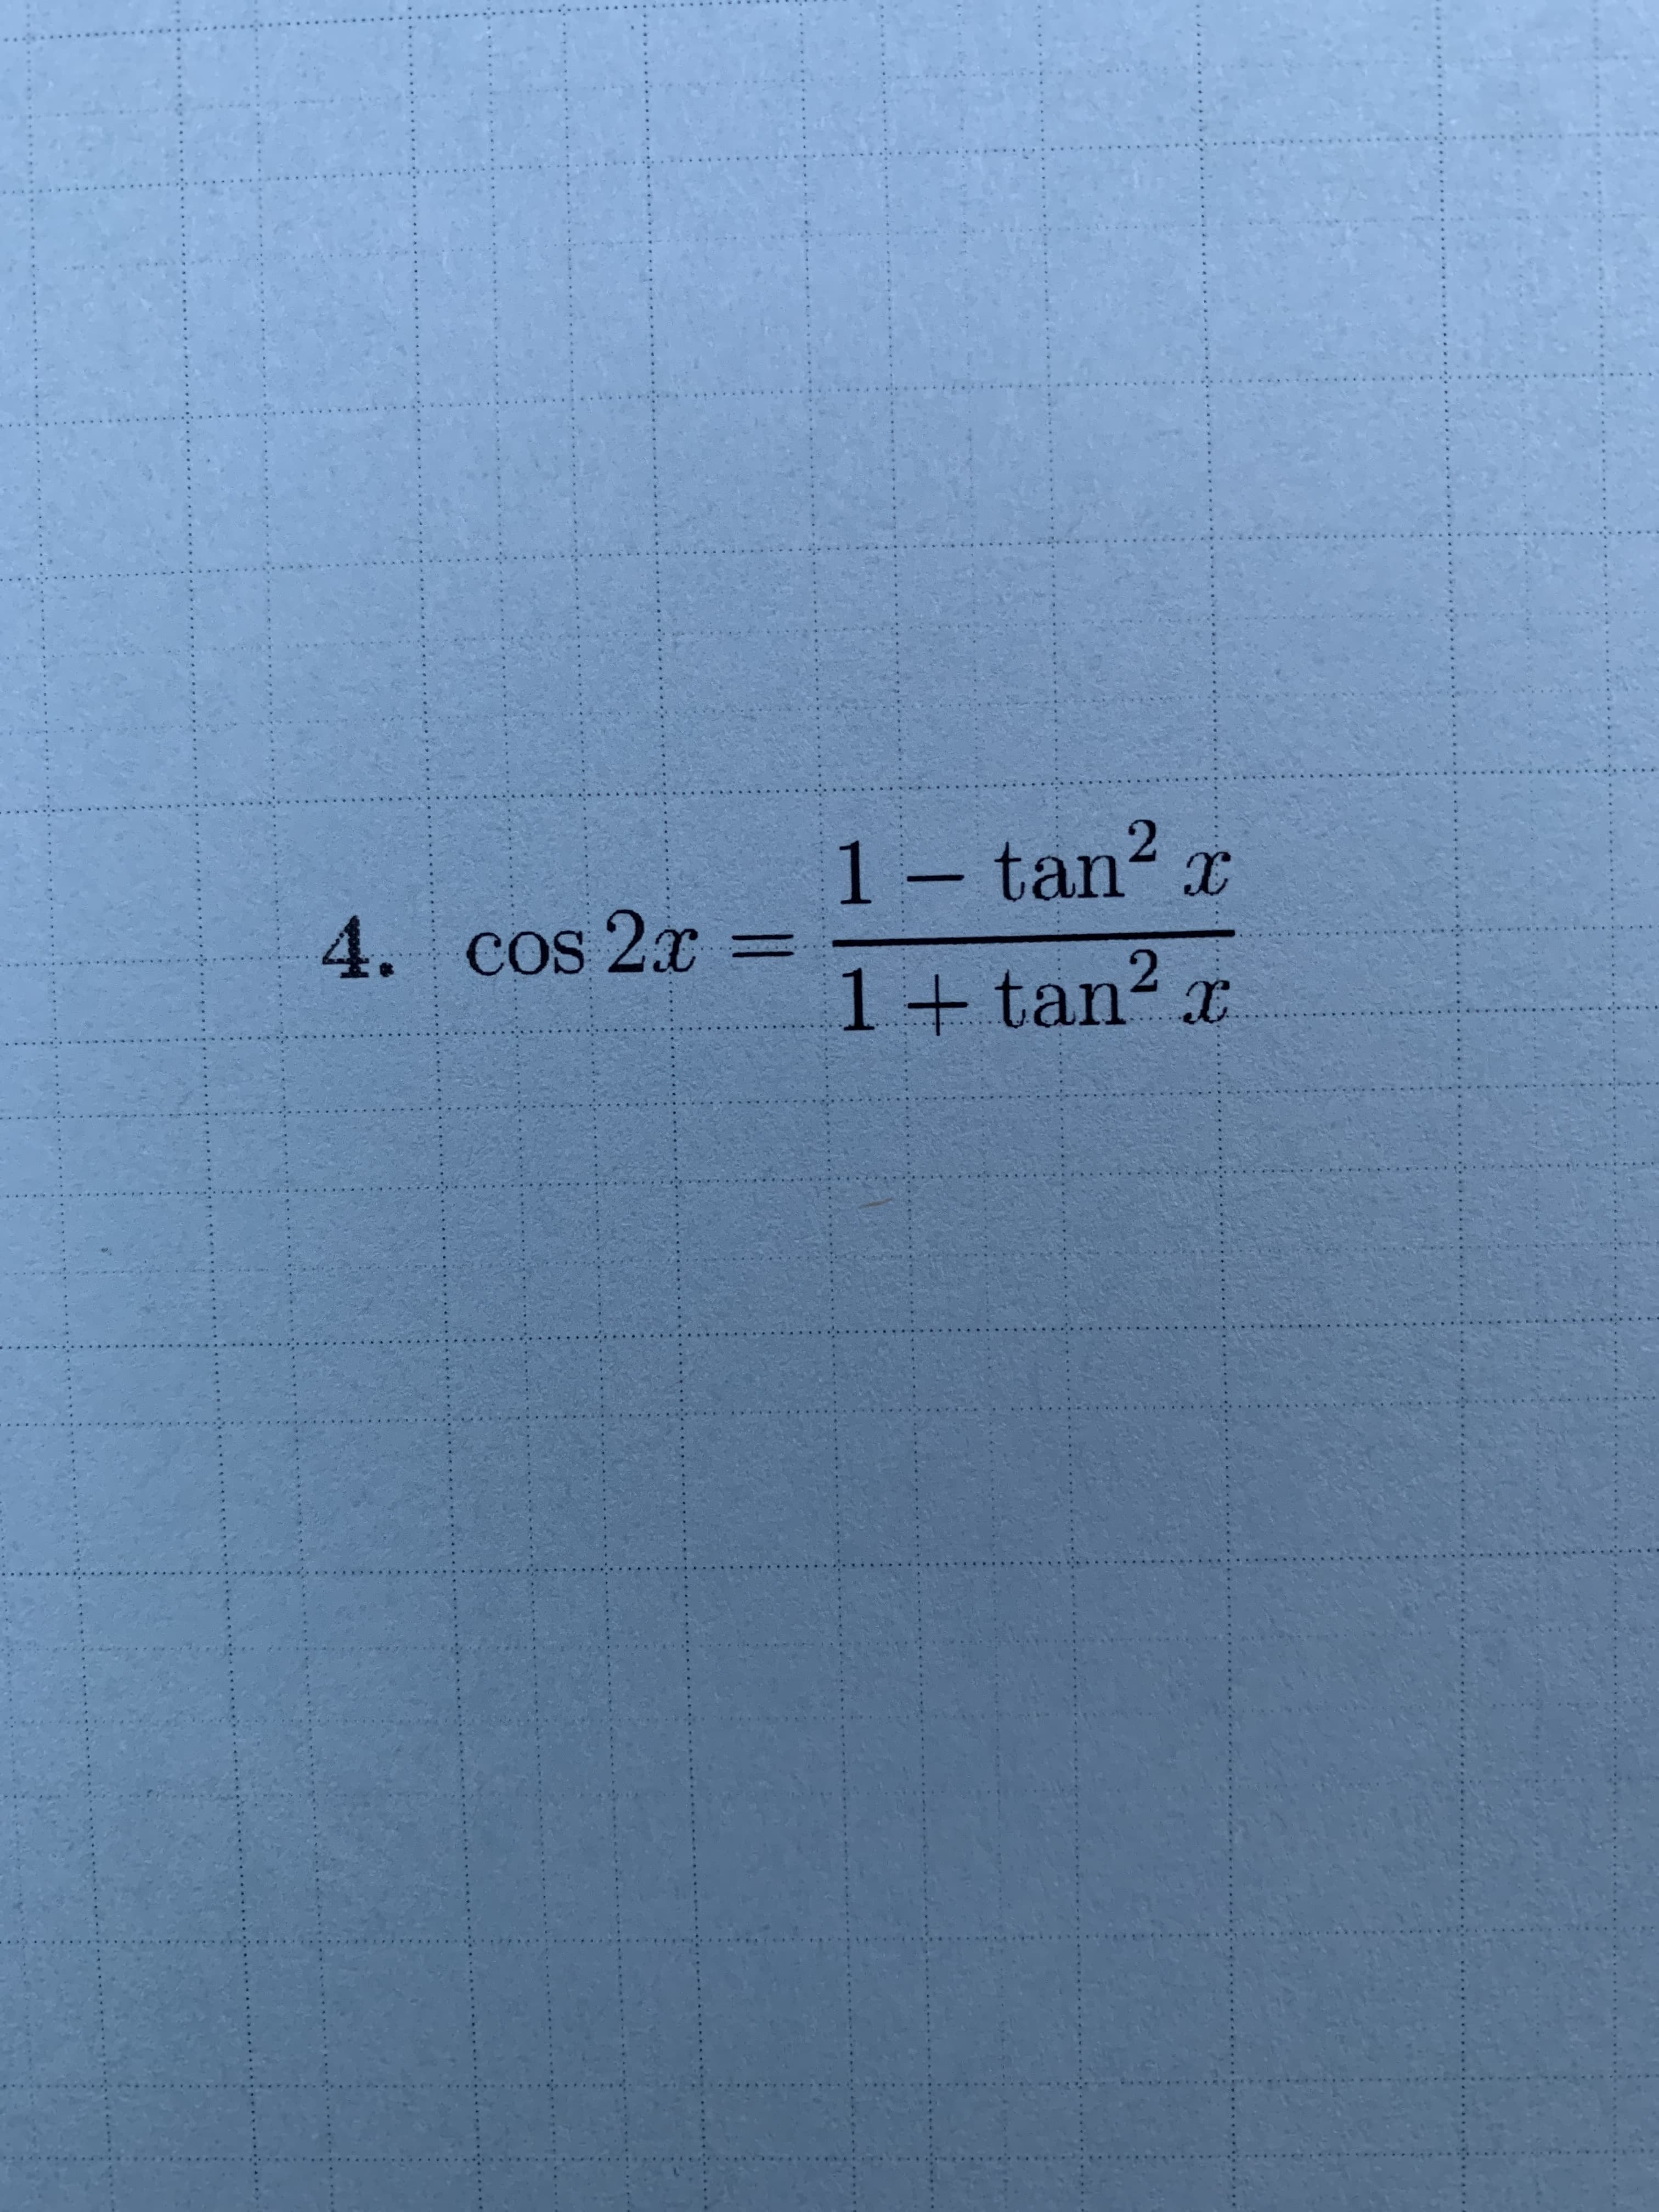 1 - tan2 x
X
4. cos 2x
1 +tan2
